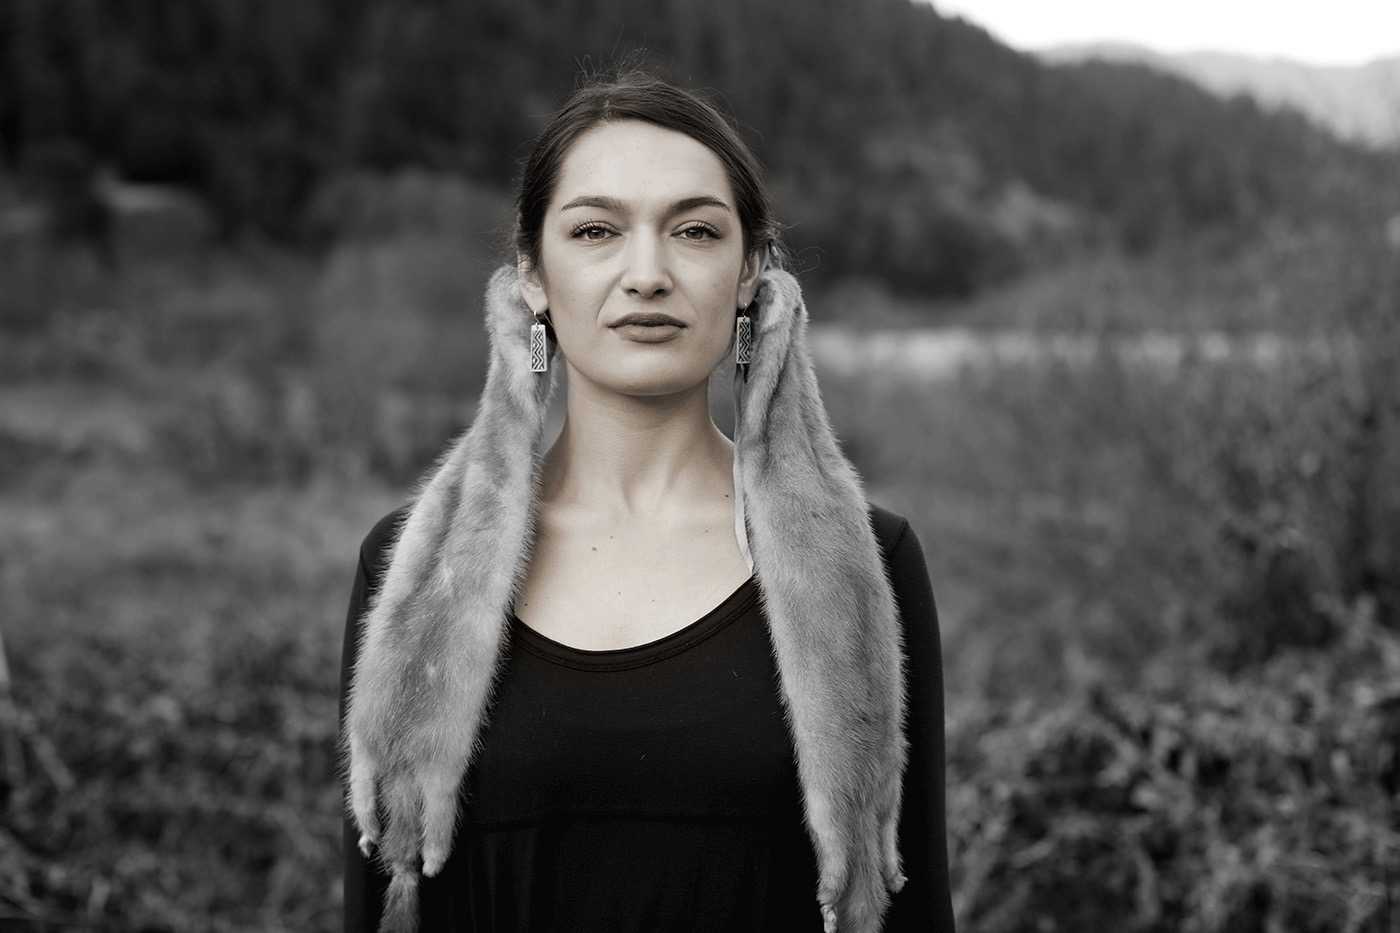 Matika Wilbur: A modern world doesn't erase indigenous intelligence